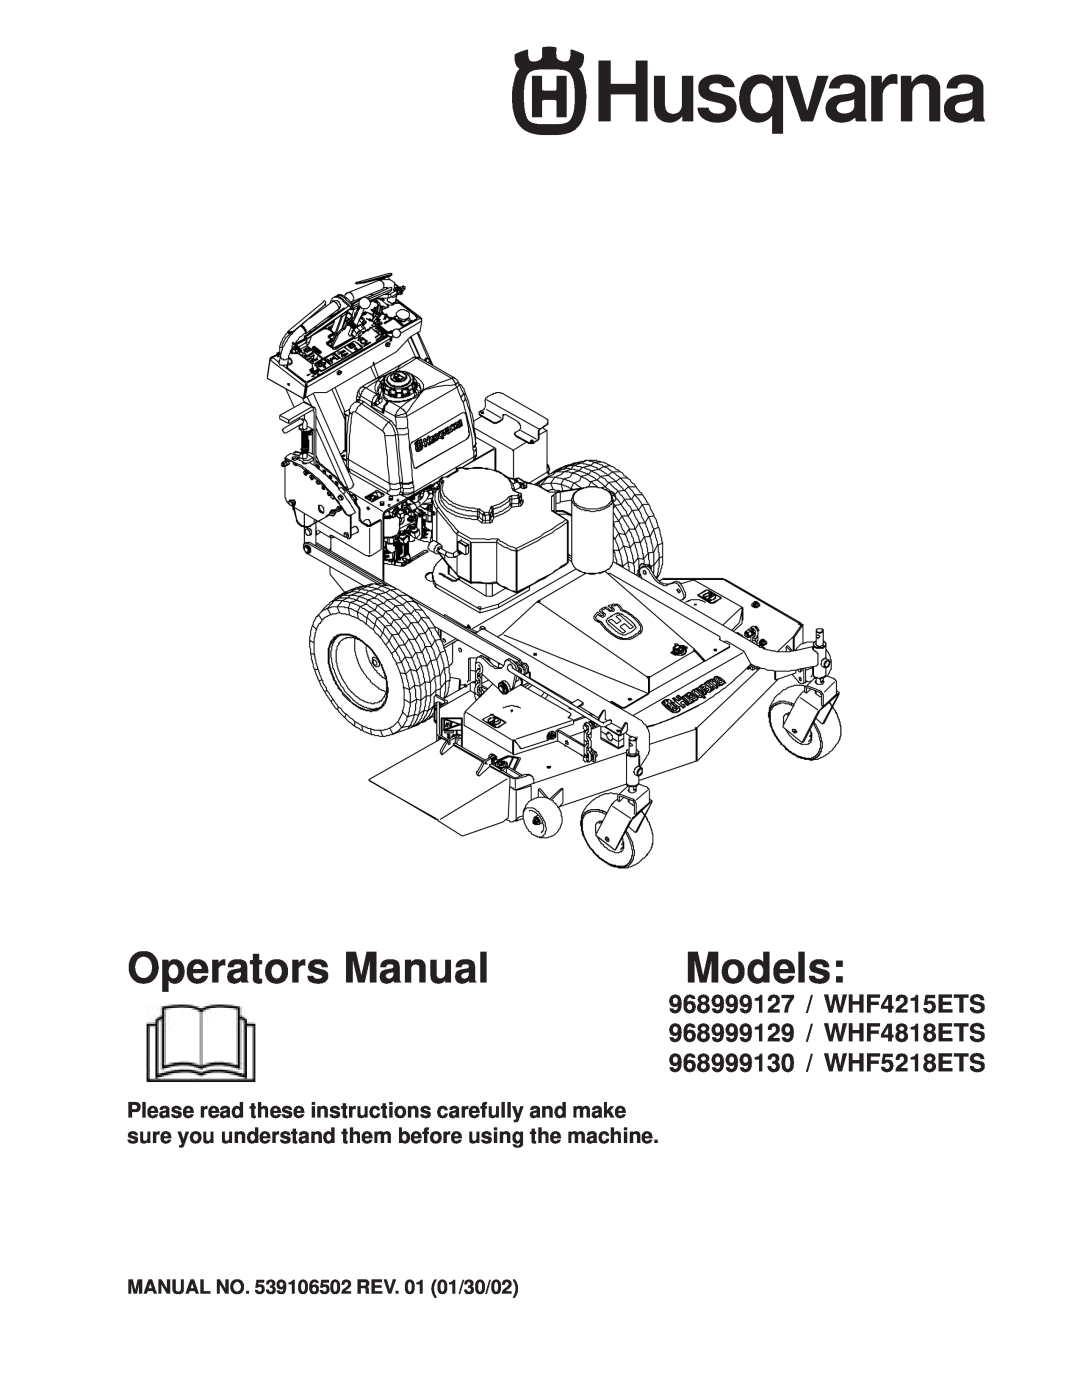 Husqvarna manual Operators Manual, Models, 968999127 / WHF4215ETS, 968999129 / WHF4818ETS, 968999130 / WHF5218ETS 